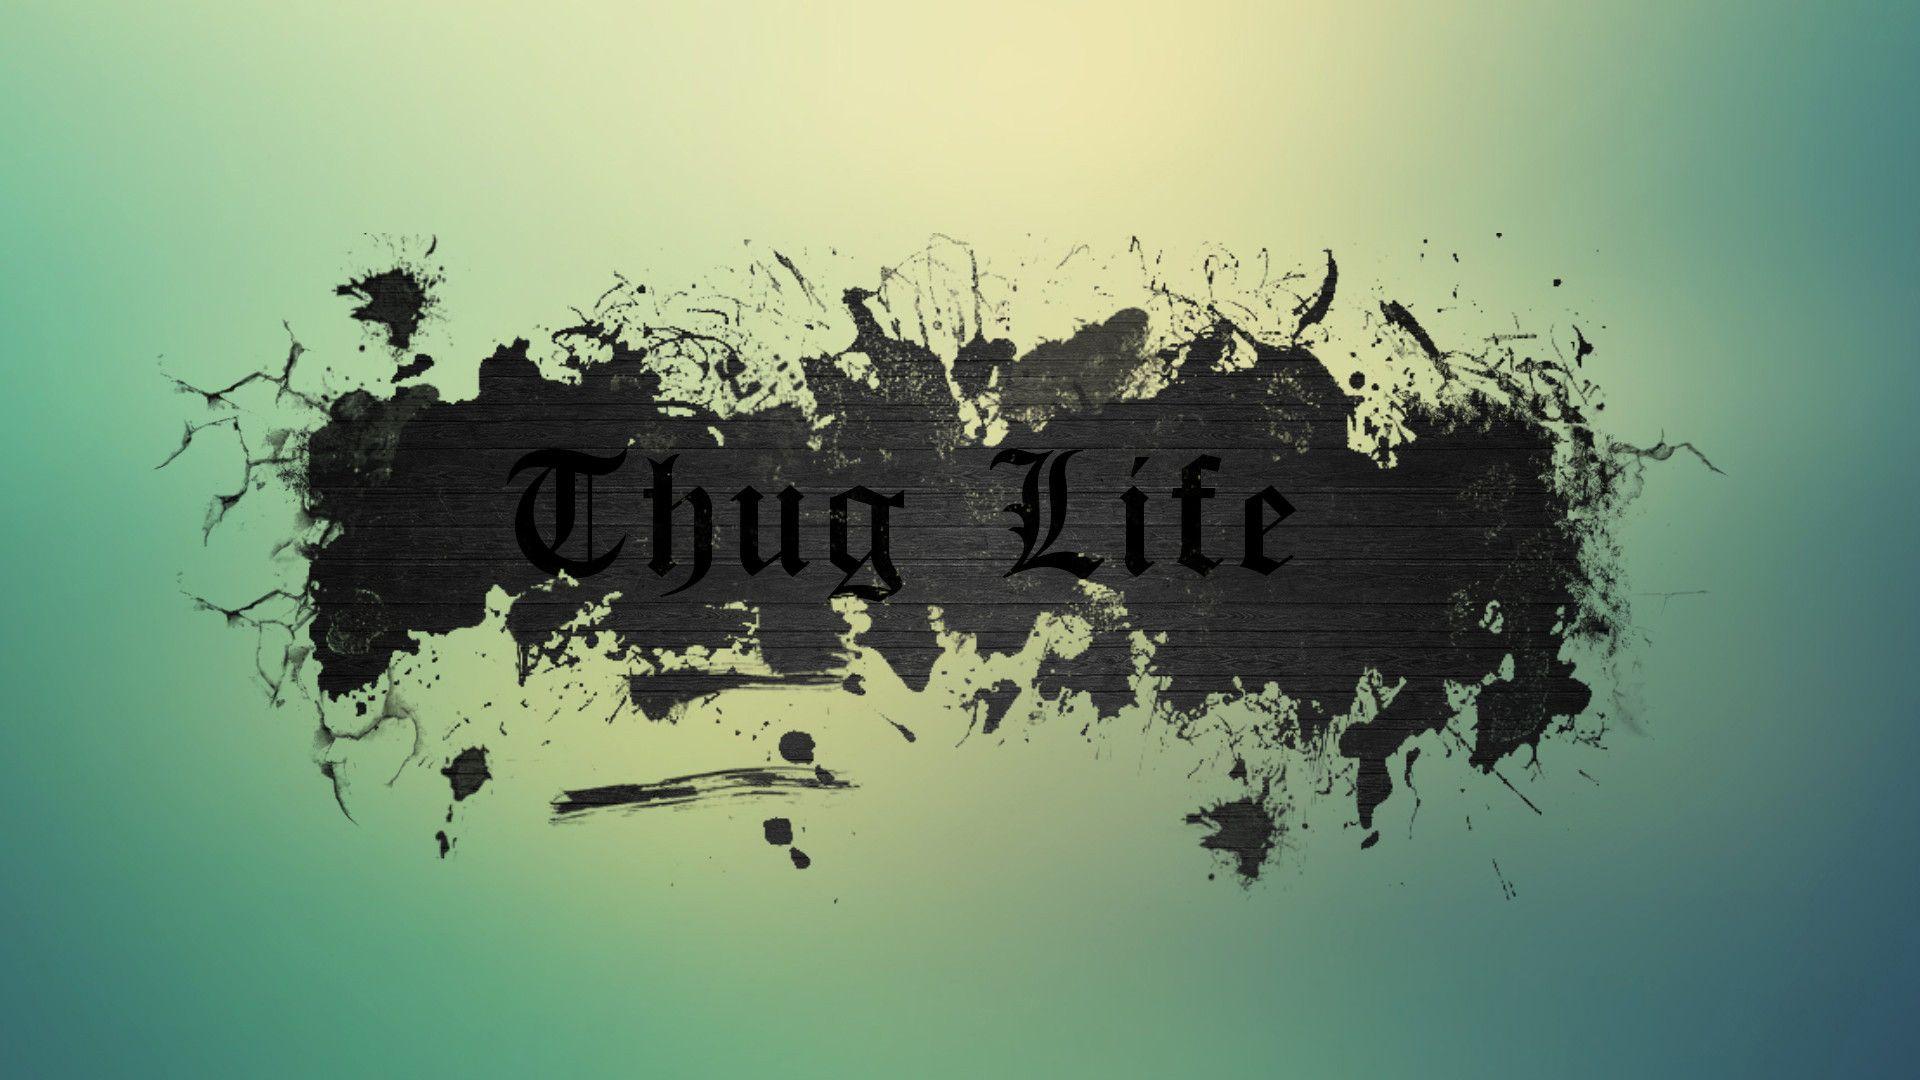 px Popular 100% Quality HD Image of Thug Life, Full HD